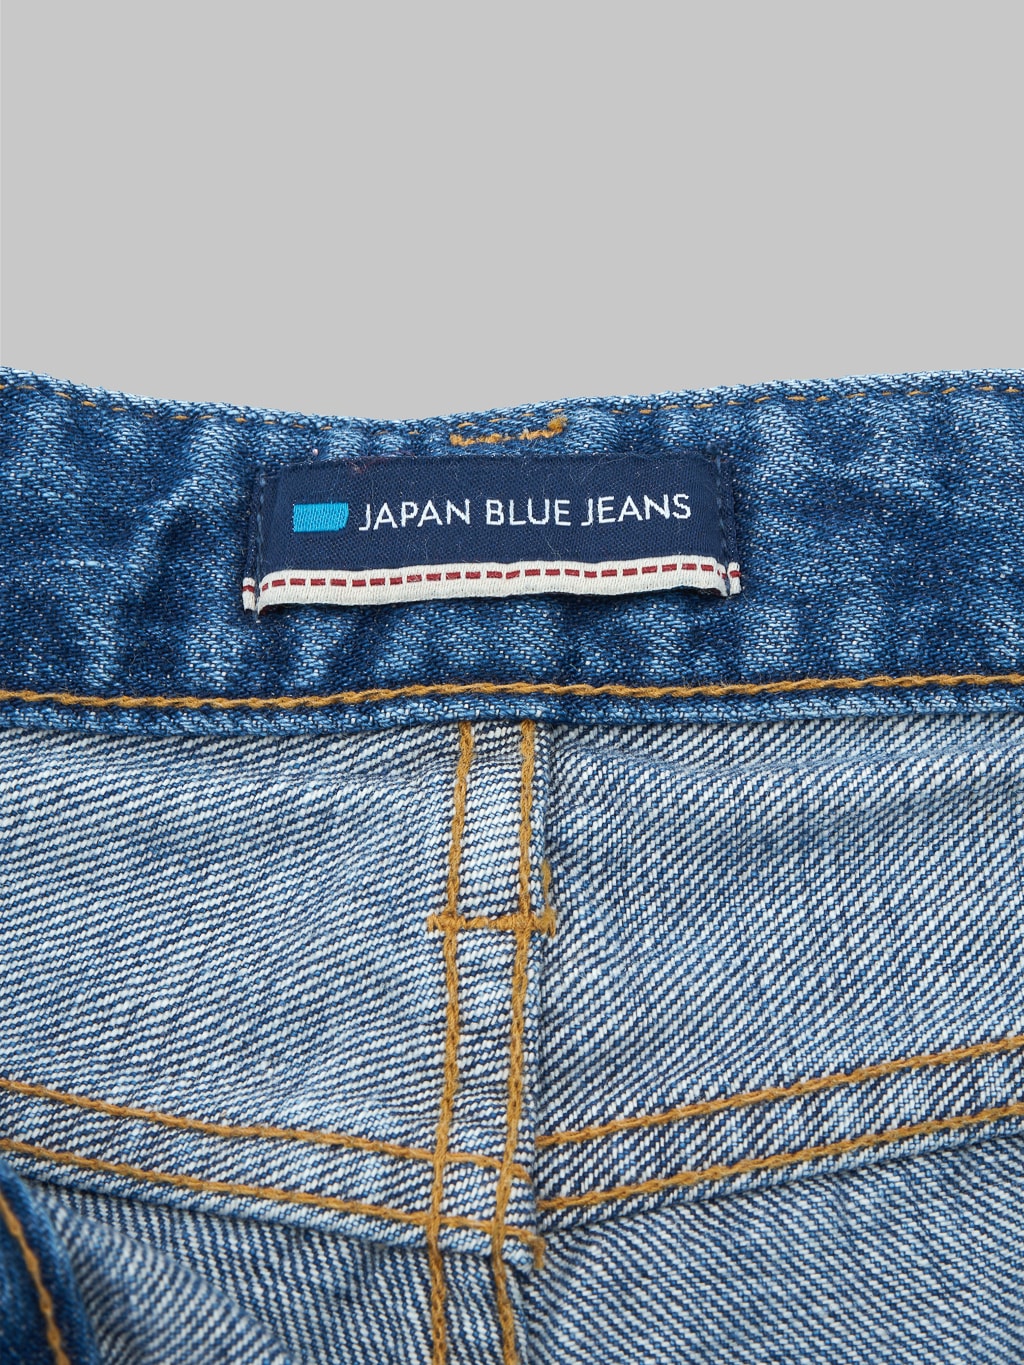 Japan Blue J304 Africa cotton Stonewashed Straight Jeans interior label